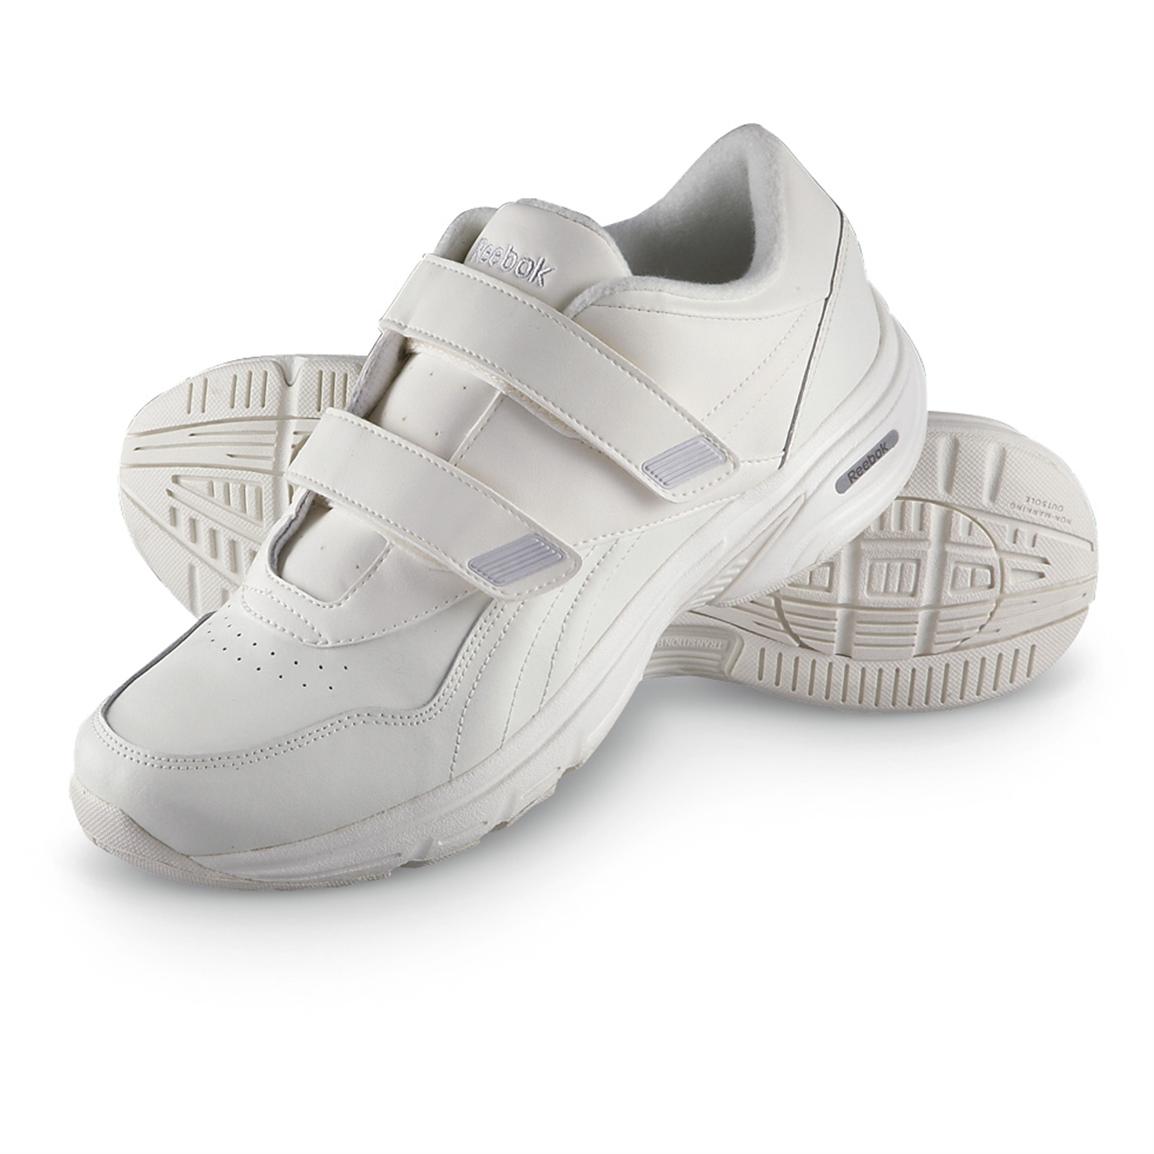 Men's Reebok® Walking Shoes, Cream 219006, Running Shoes